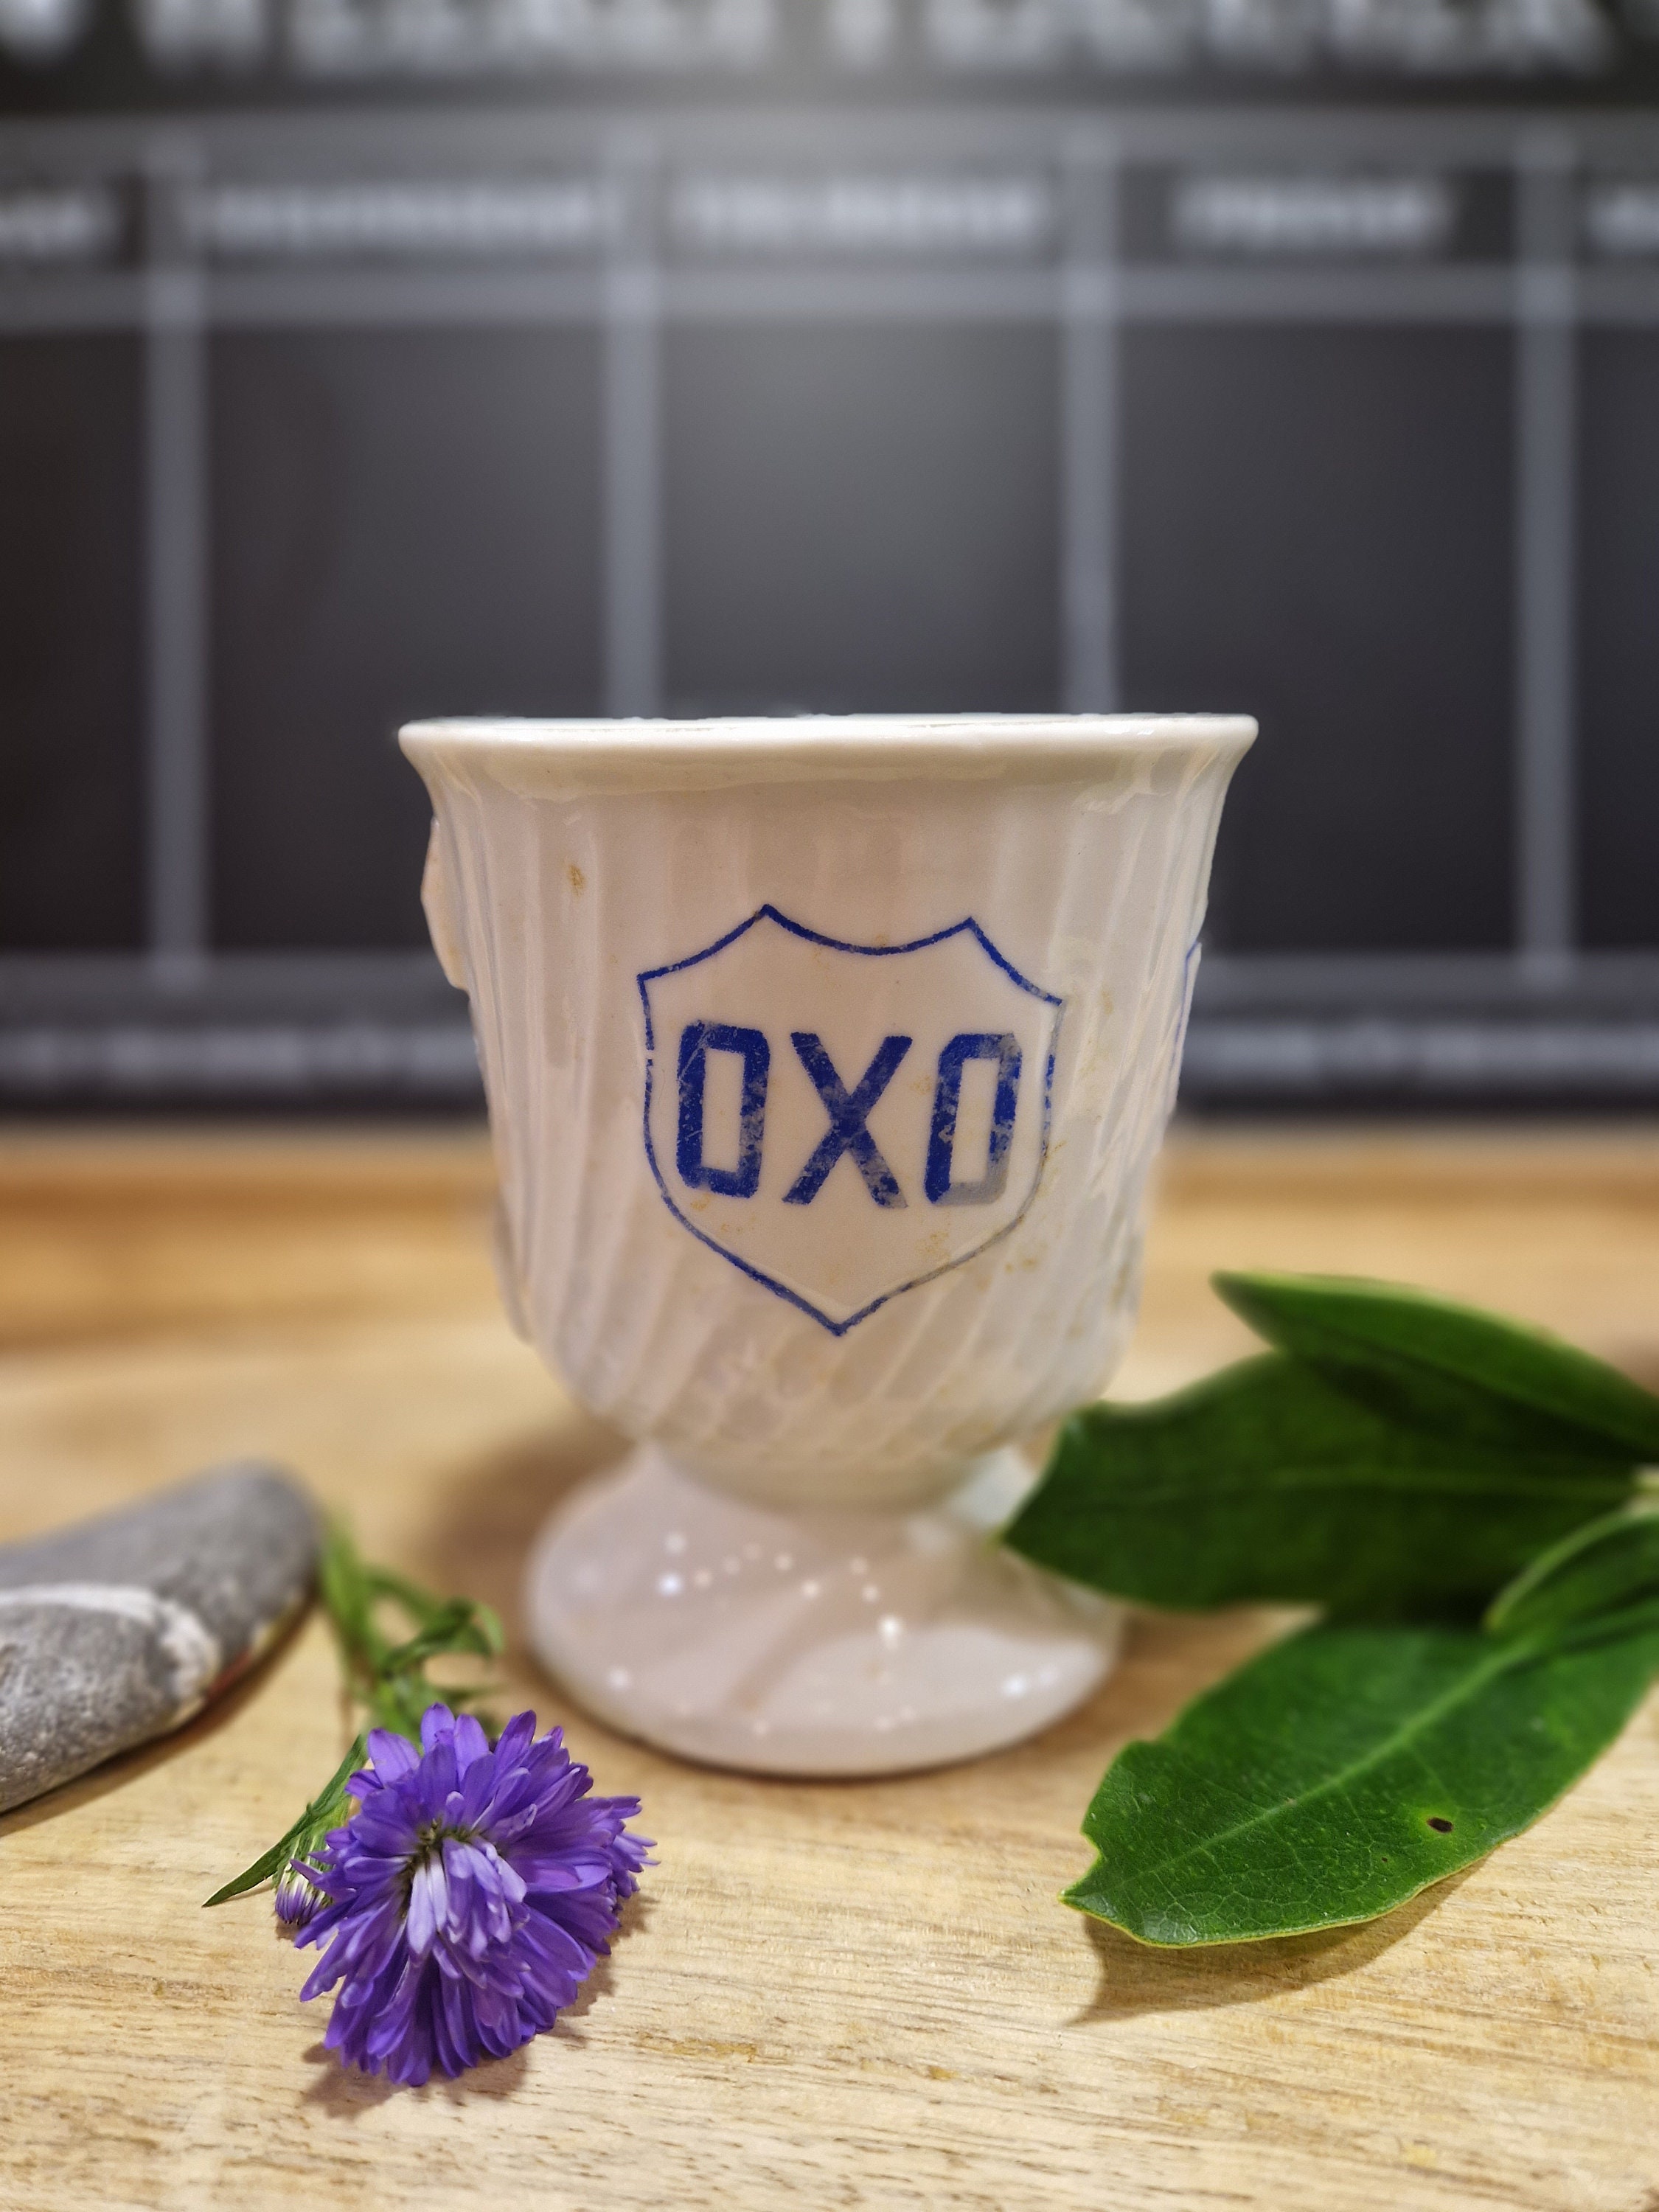 Vintage OXO Mug Collectible Advertising Vintage Memorabilia 